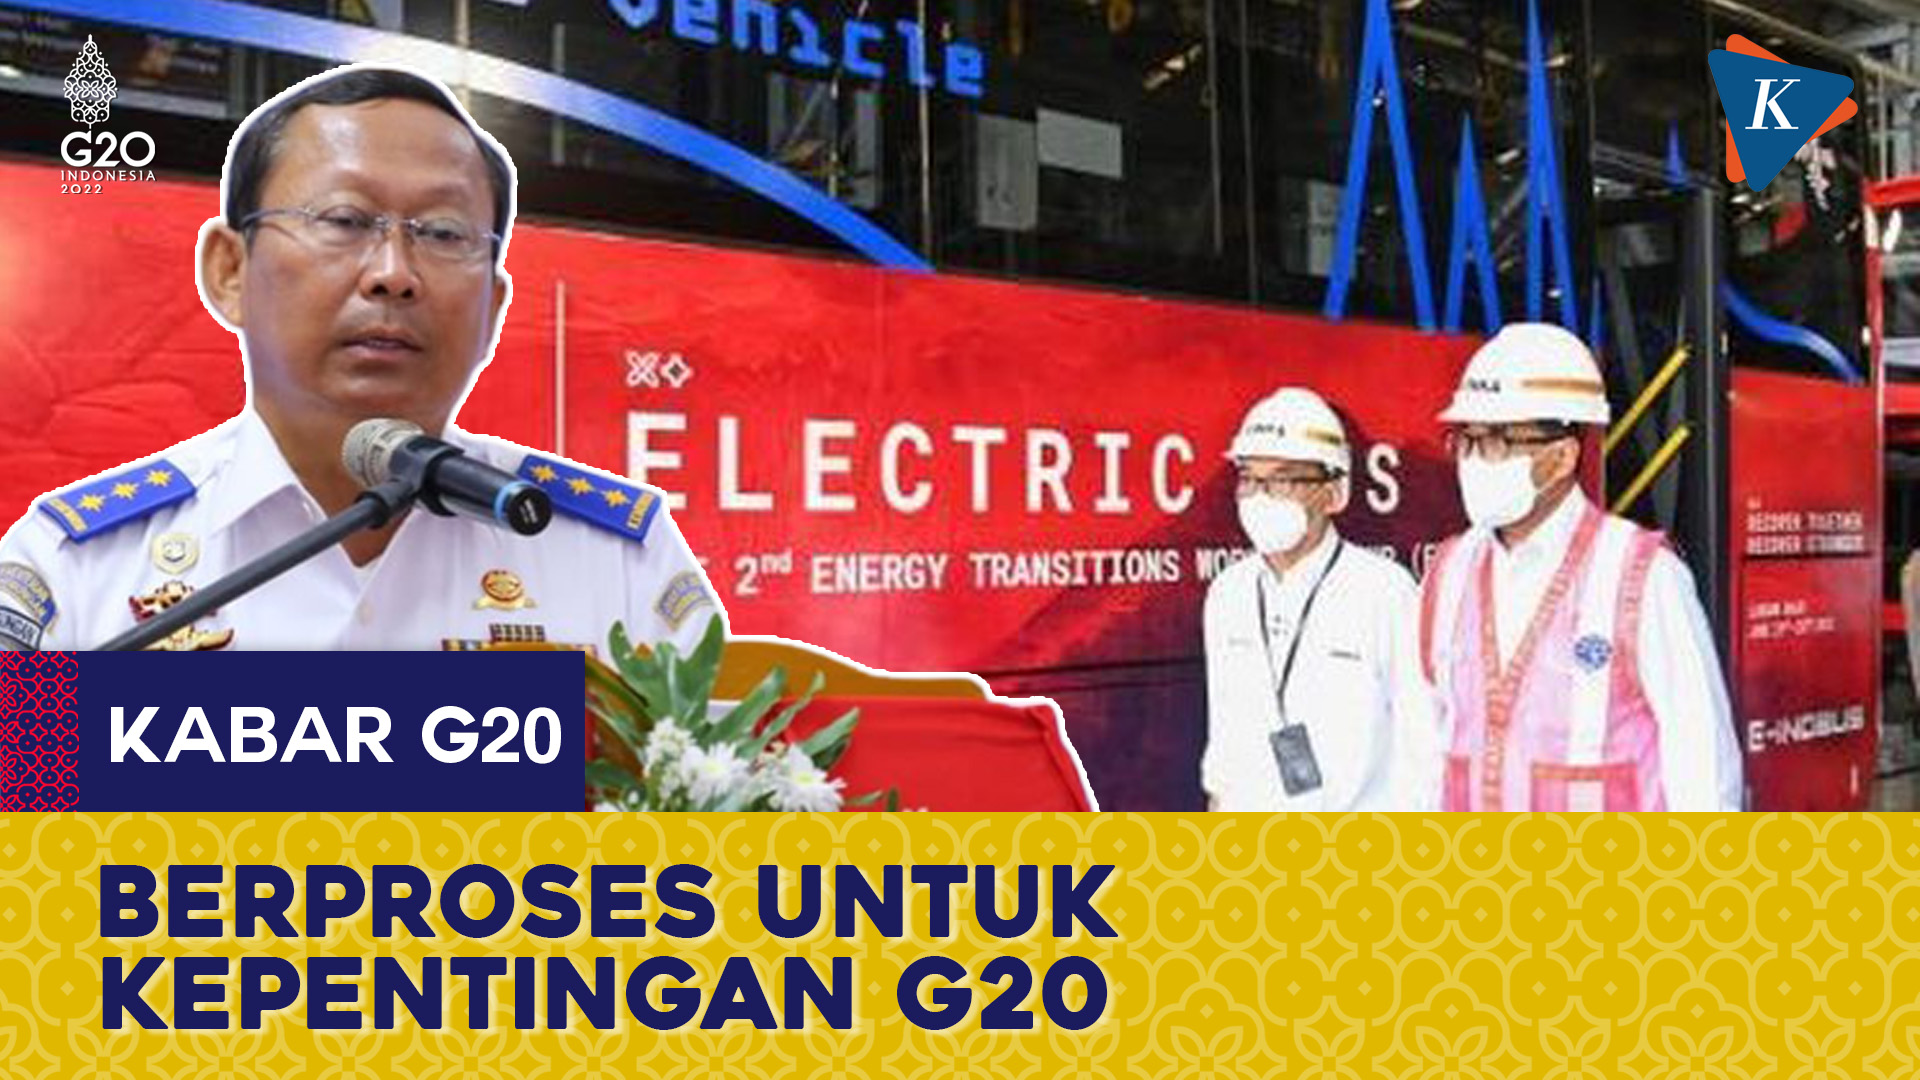 Kemenhub Siapkan 30 Unit Bus Listrik untuk KTT G20 di Bali